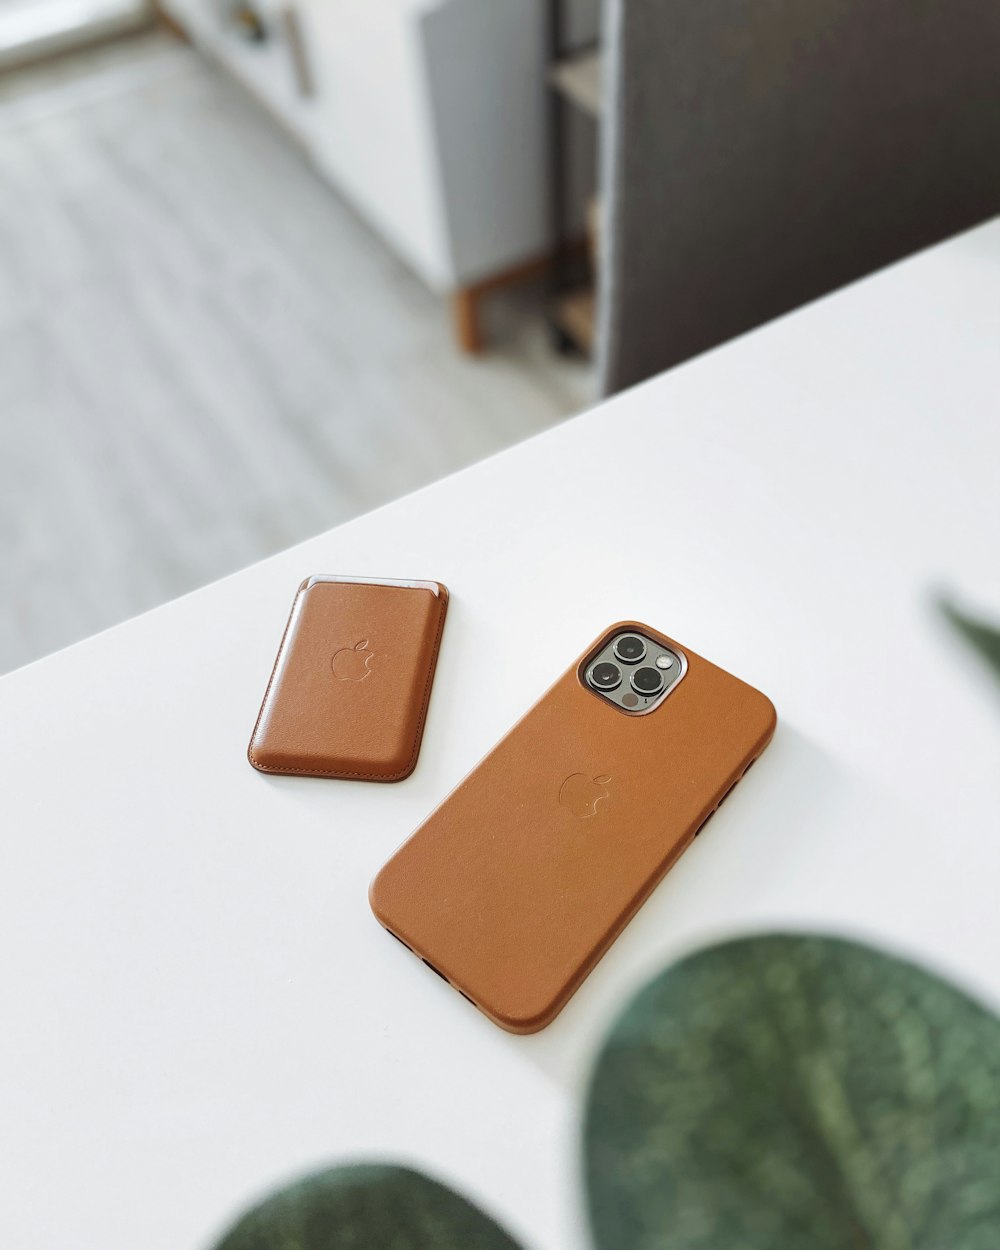 orange iphone case on white table